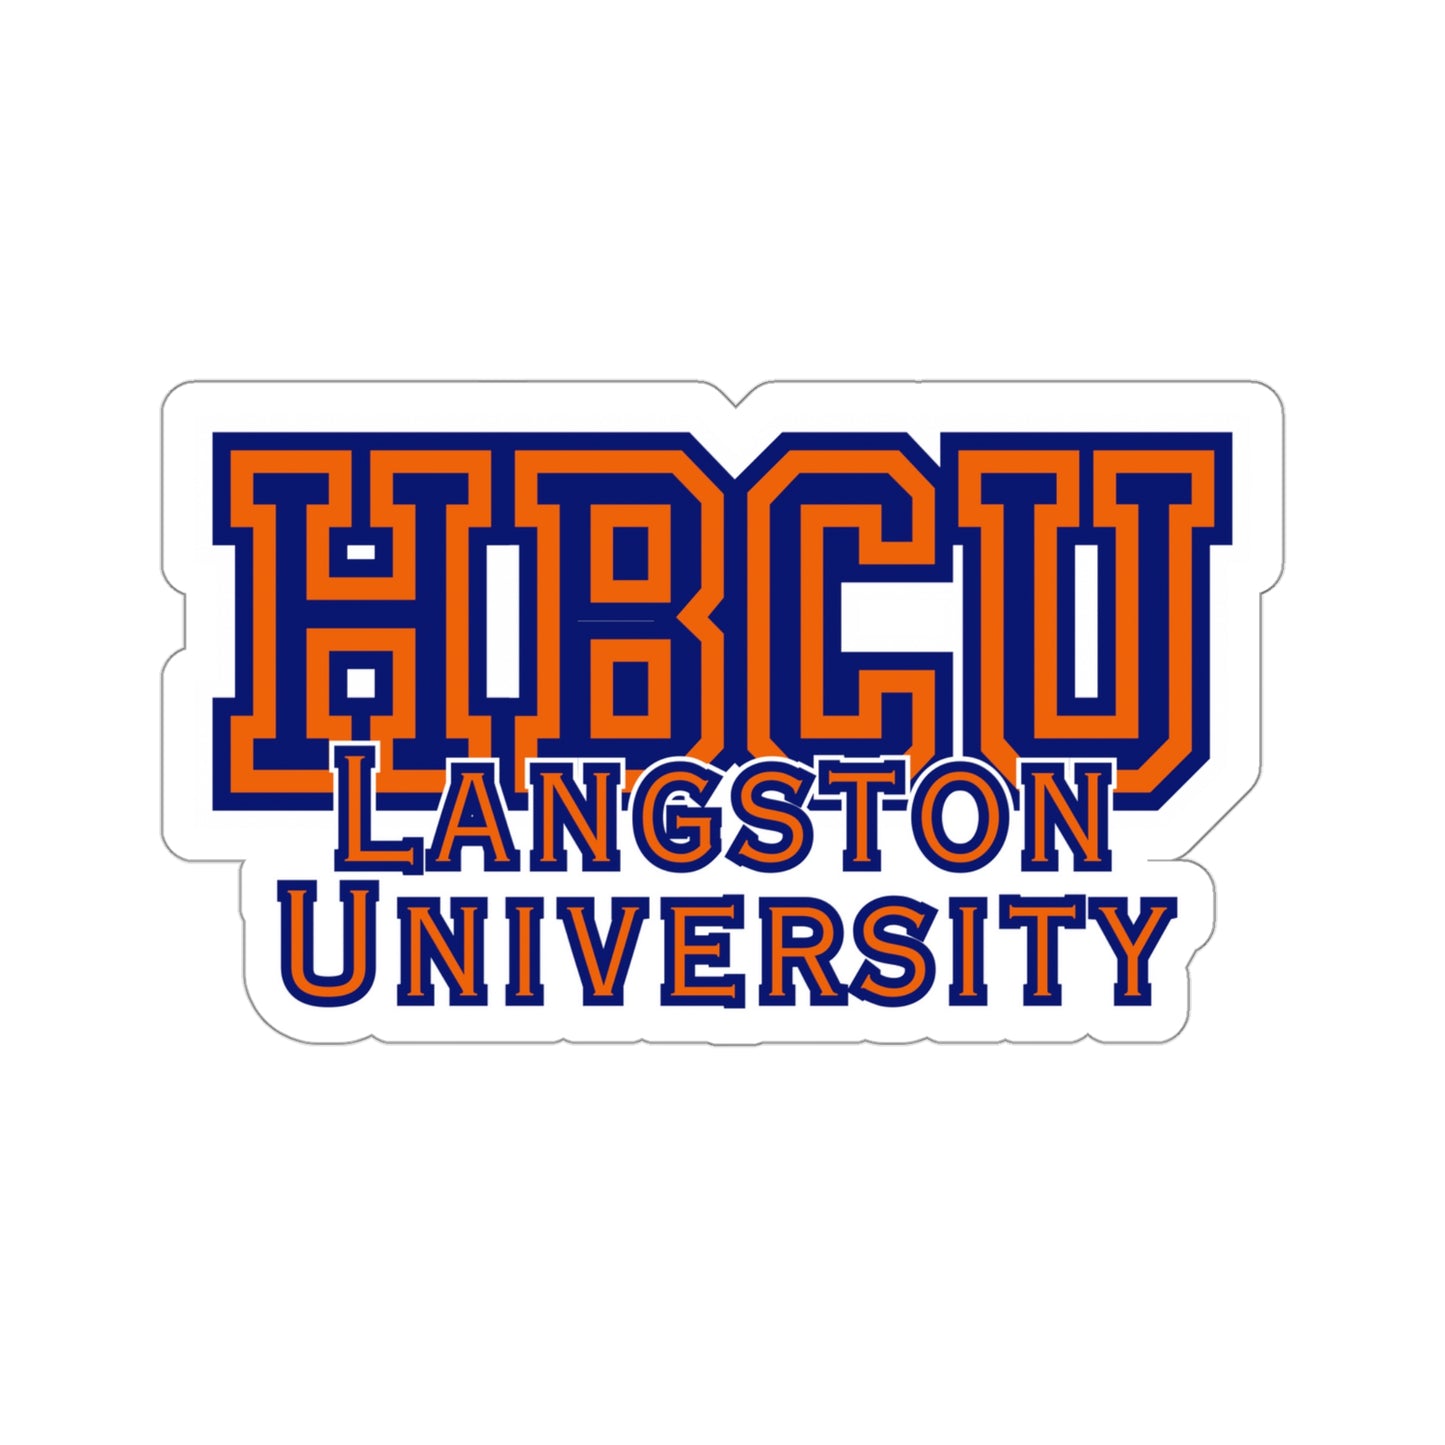 HBCU Langston University Kiss-Cut Stickers